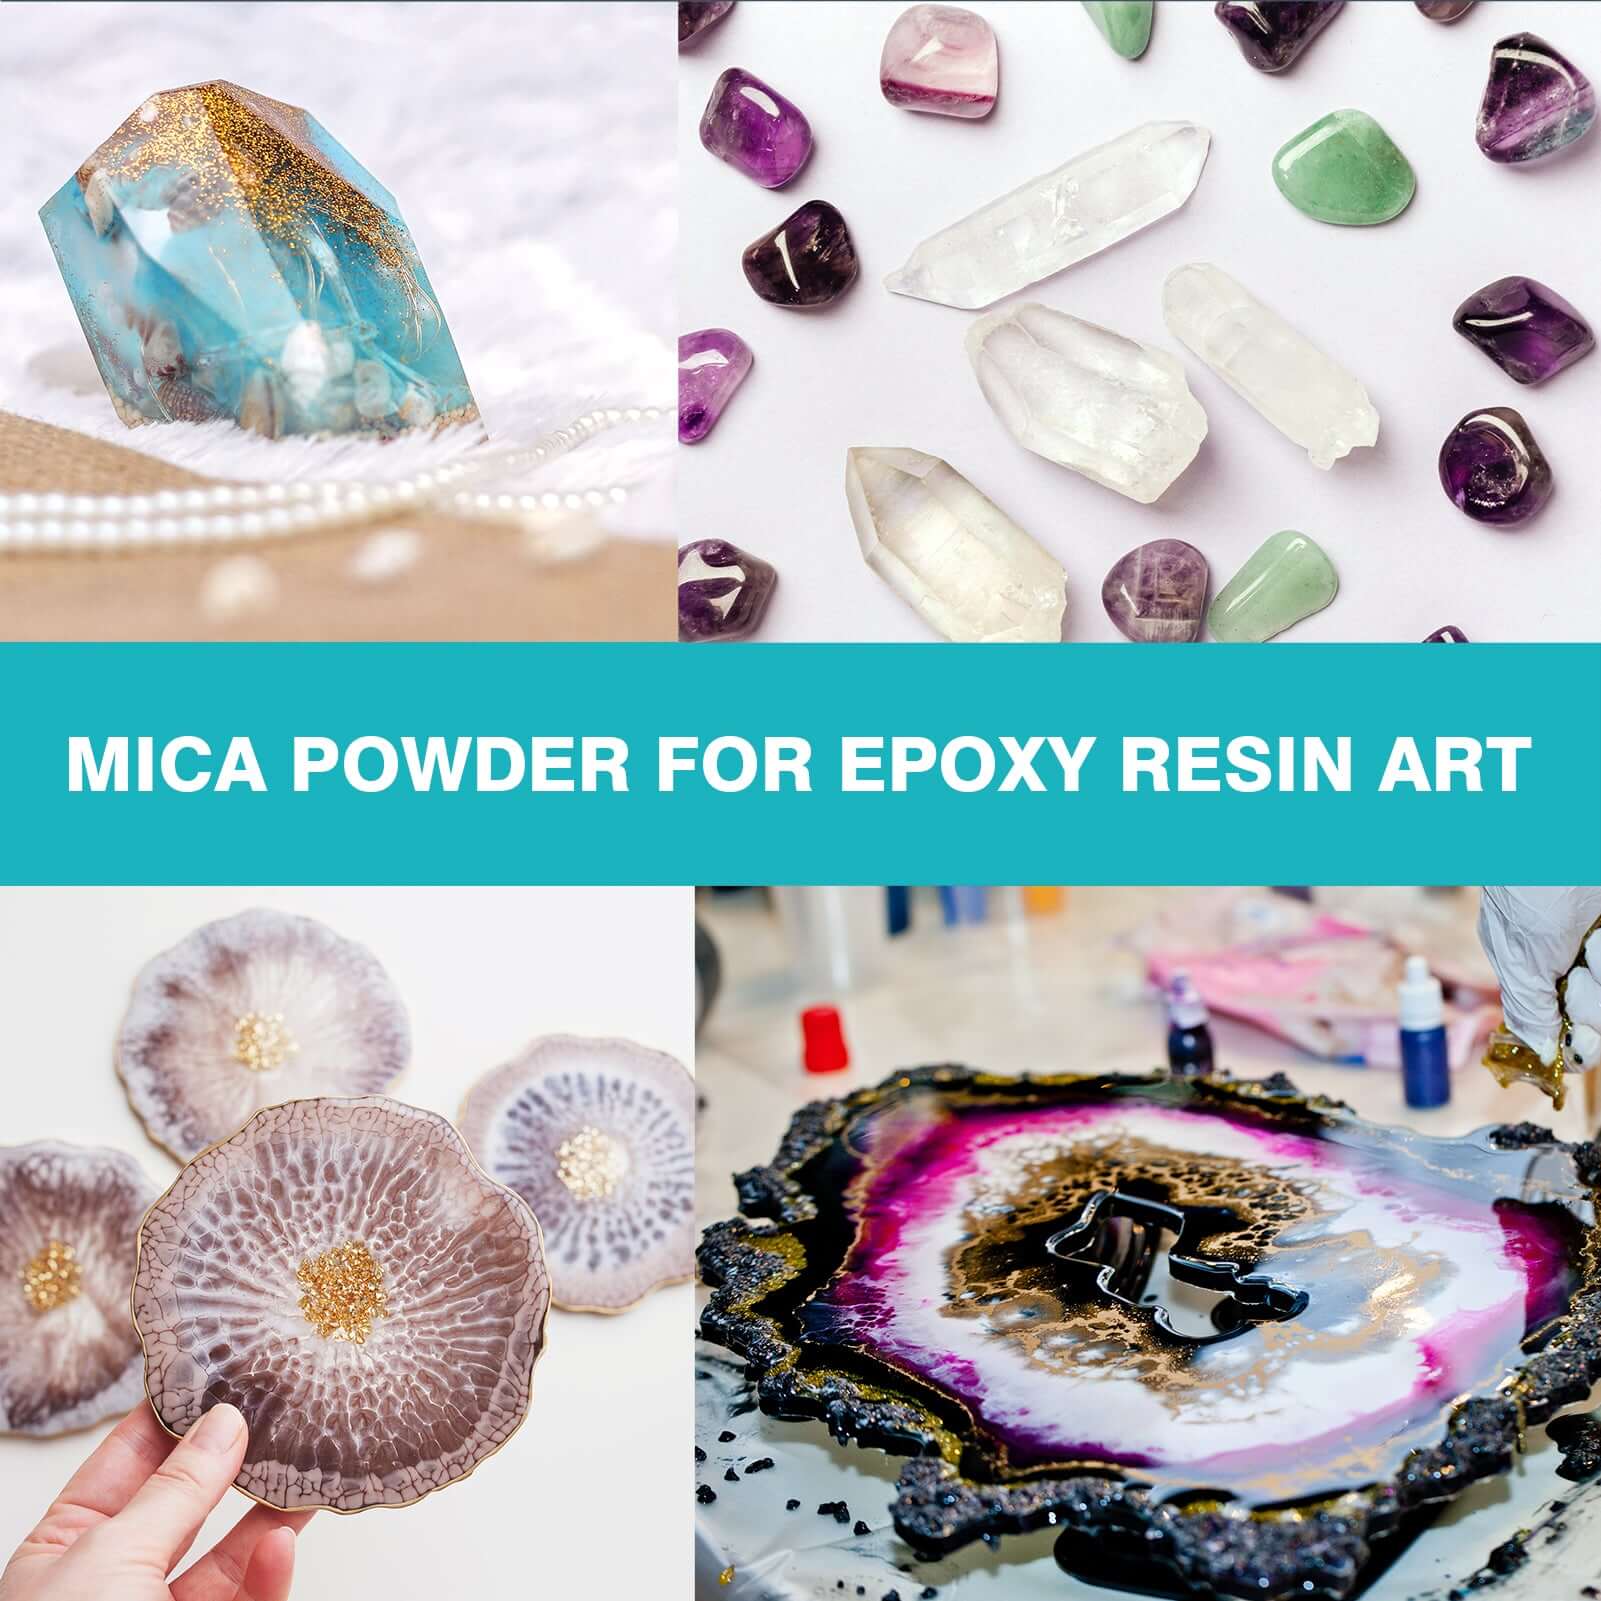 Resiners® 36 Colors Mica Powder Set, Mad Mica, 0.1oz(3g)/Bag